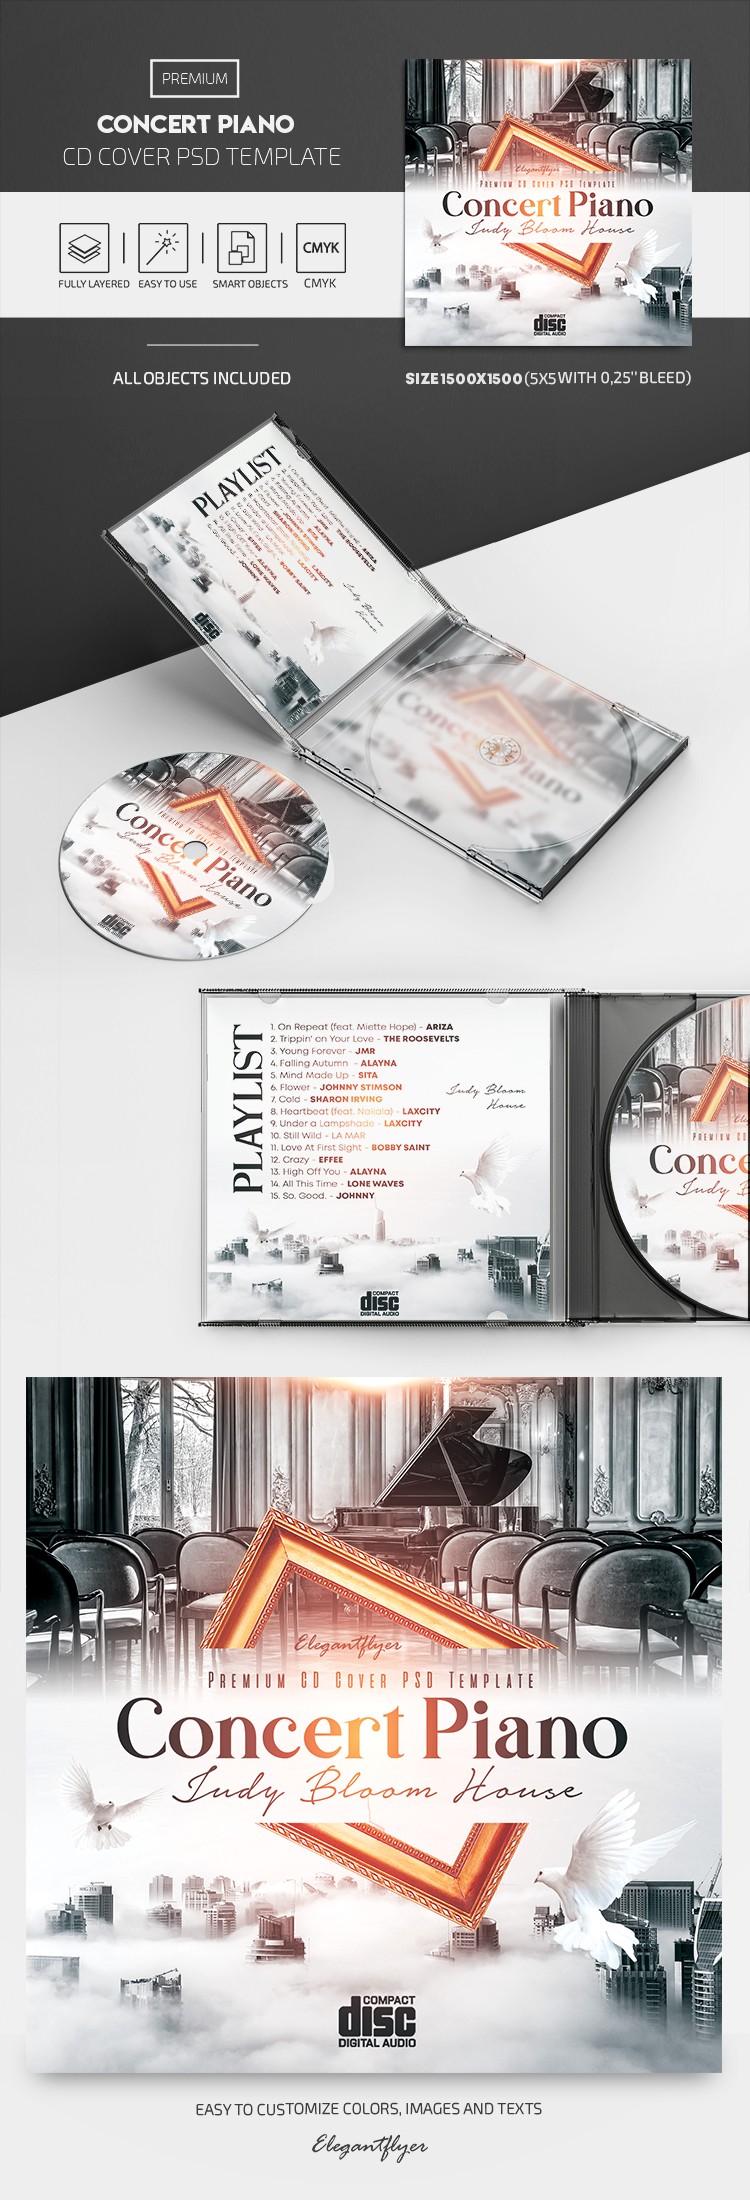 Okładka CD koncertowego na pianino by ElegantFlyer